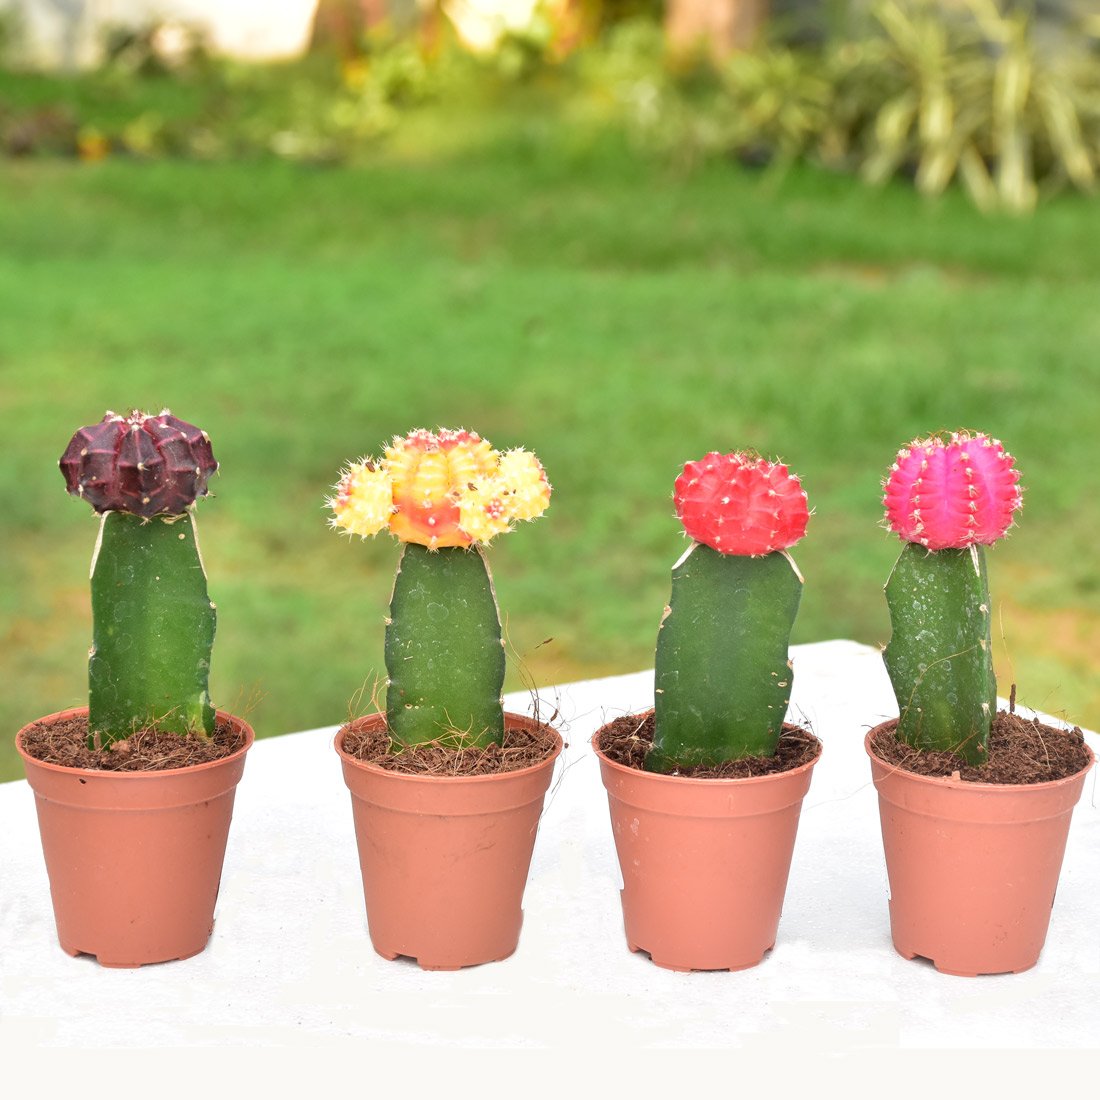 Grafted Moon Cactus Plants   Buy Online   trivandrumgardentech.com